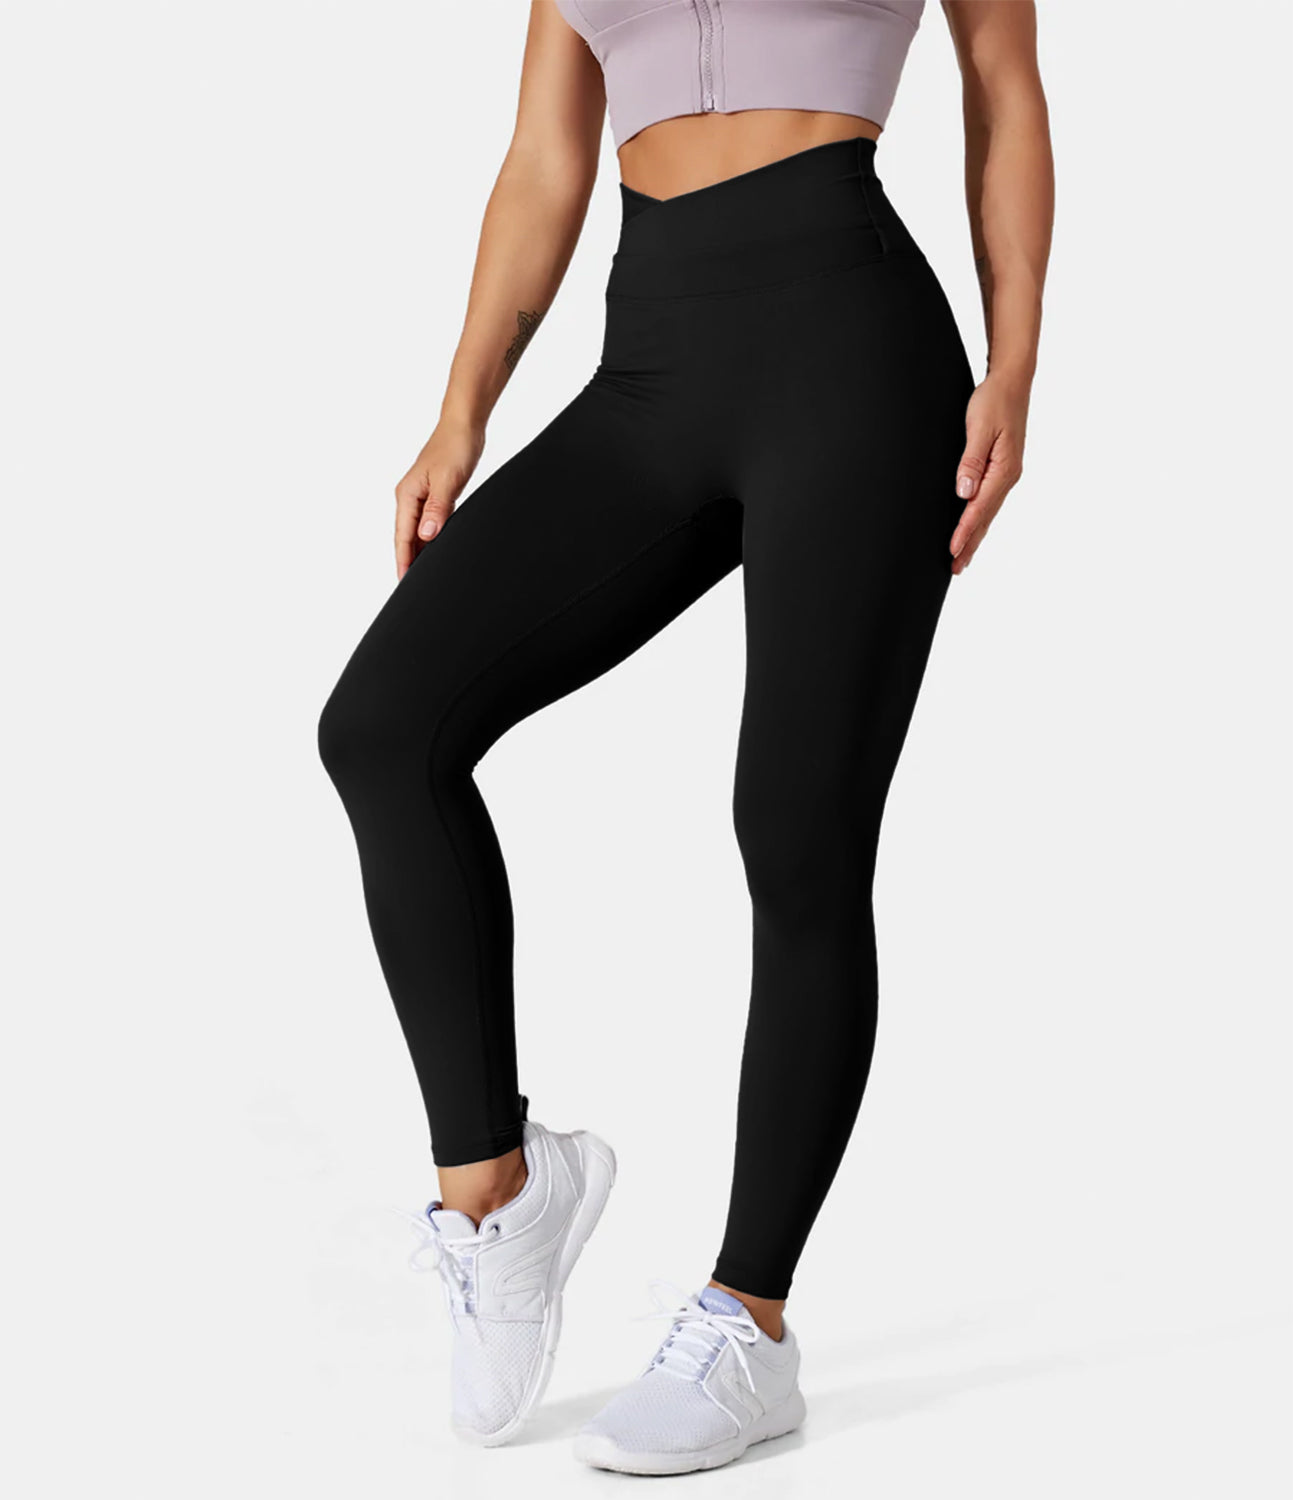 

Halara Cloudfulв„ў Fabric Crossover Color Block 7/8 Leggings - Turbulence -  gym leggings leggings with pockets leggings with butt lift